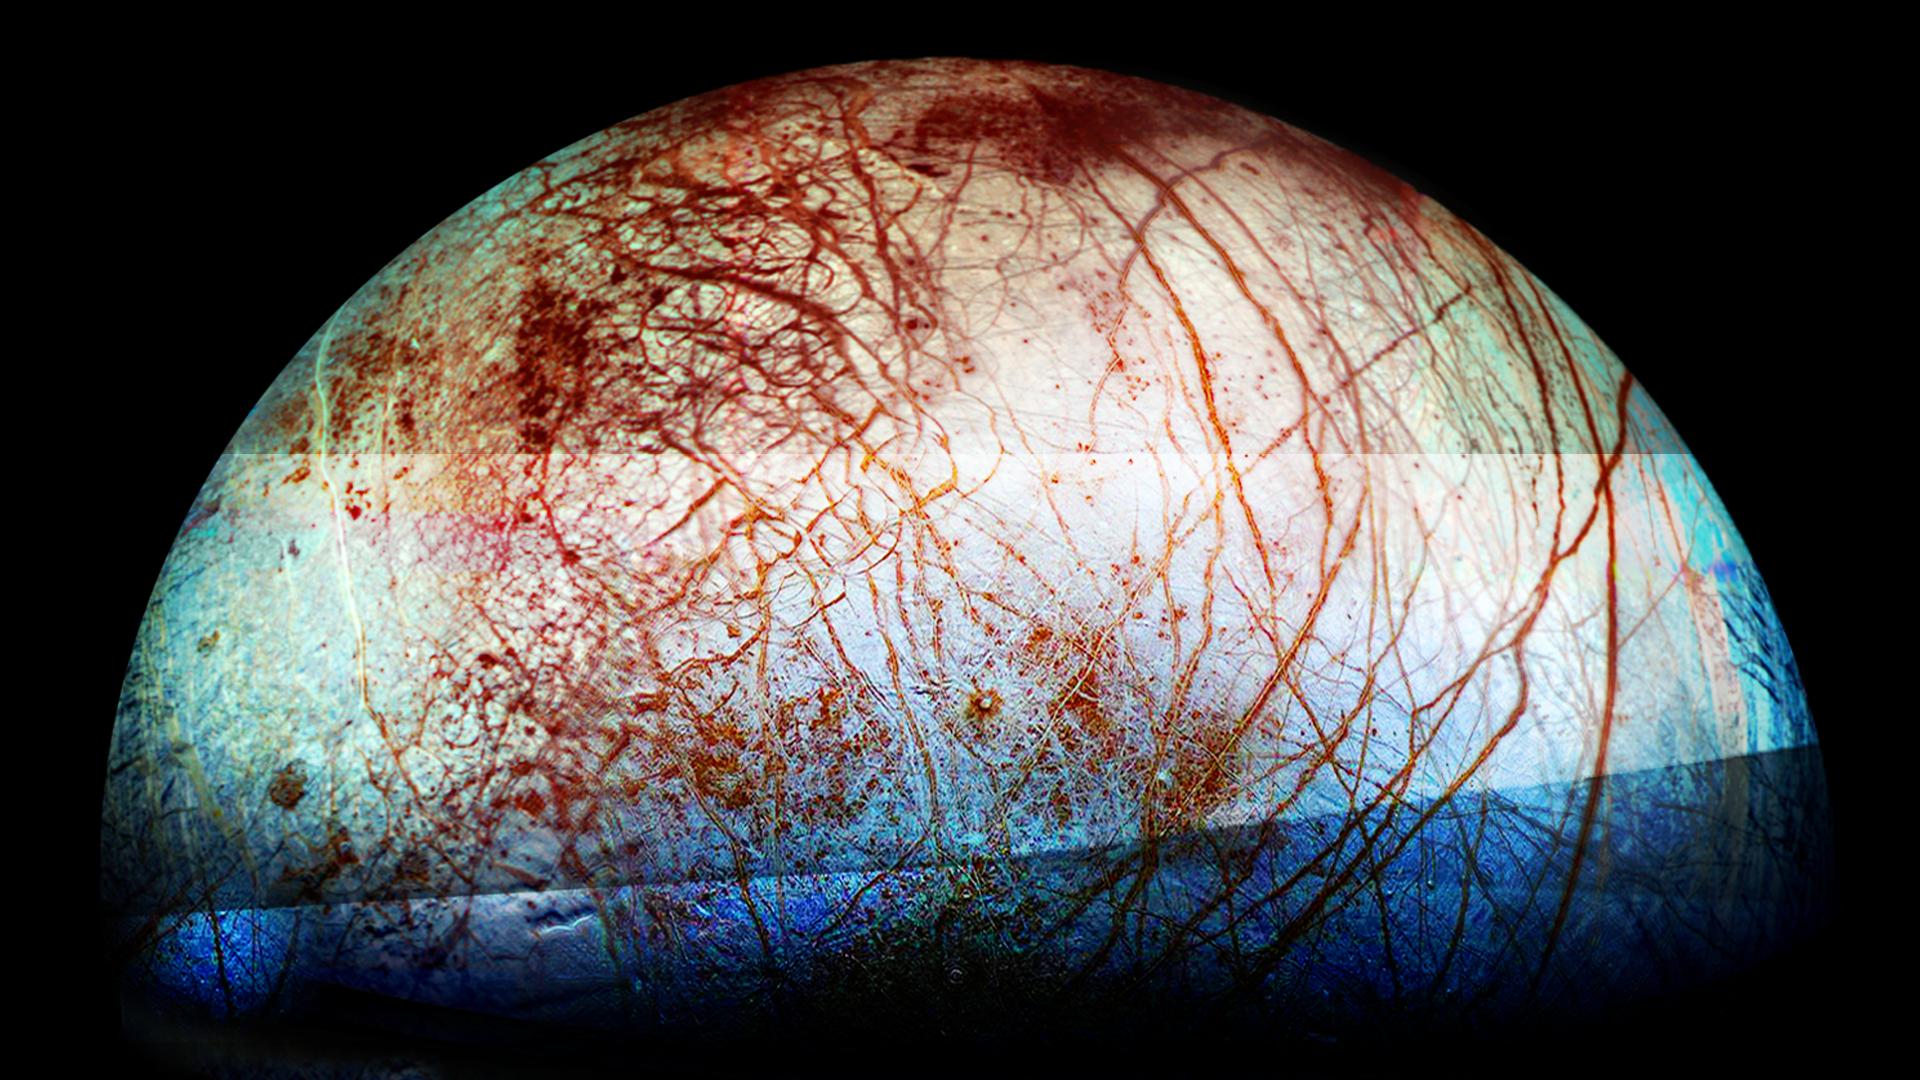 Europa Moon Wallpapers